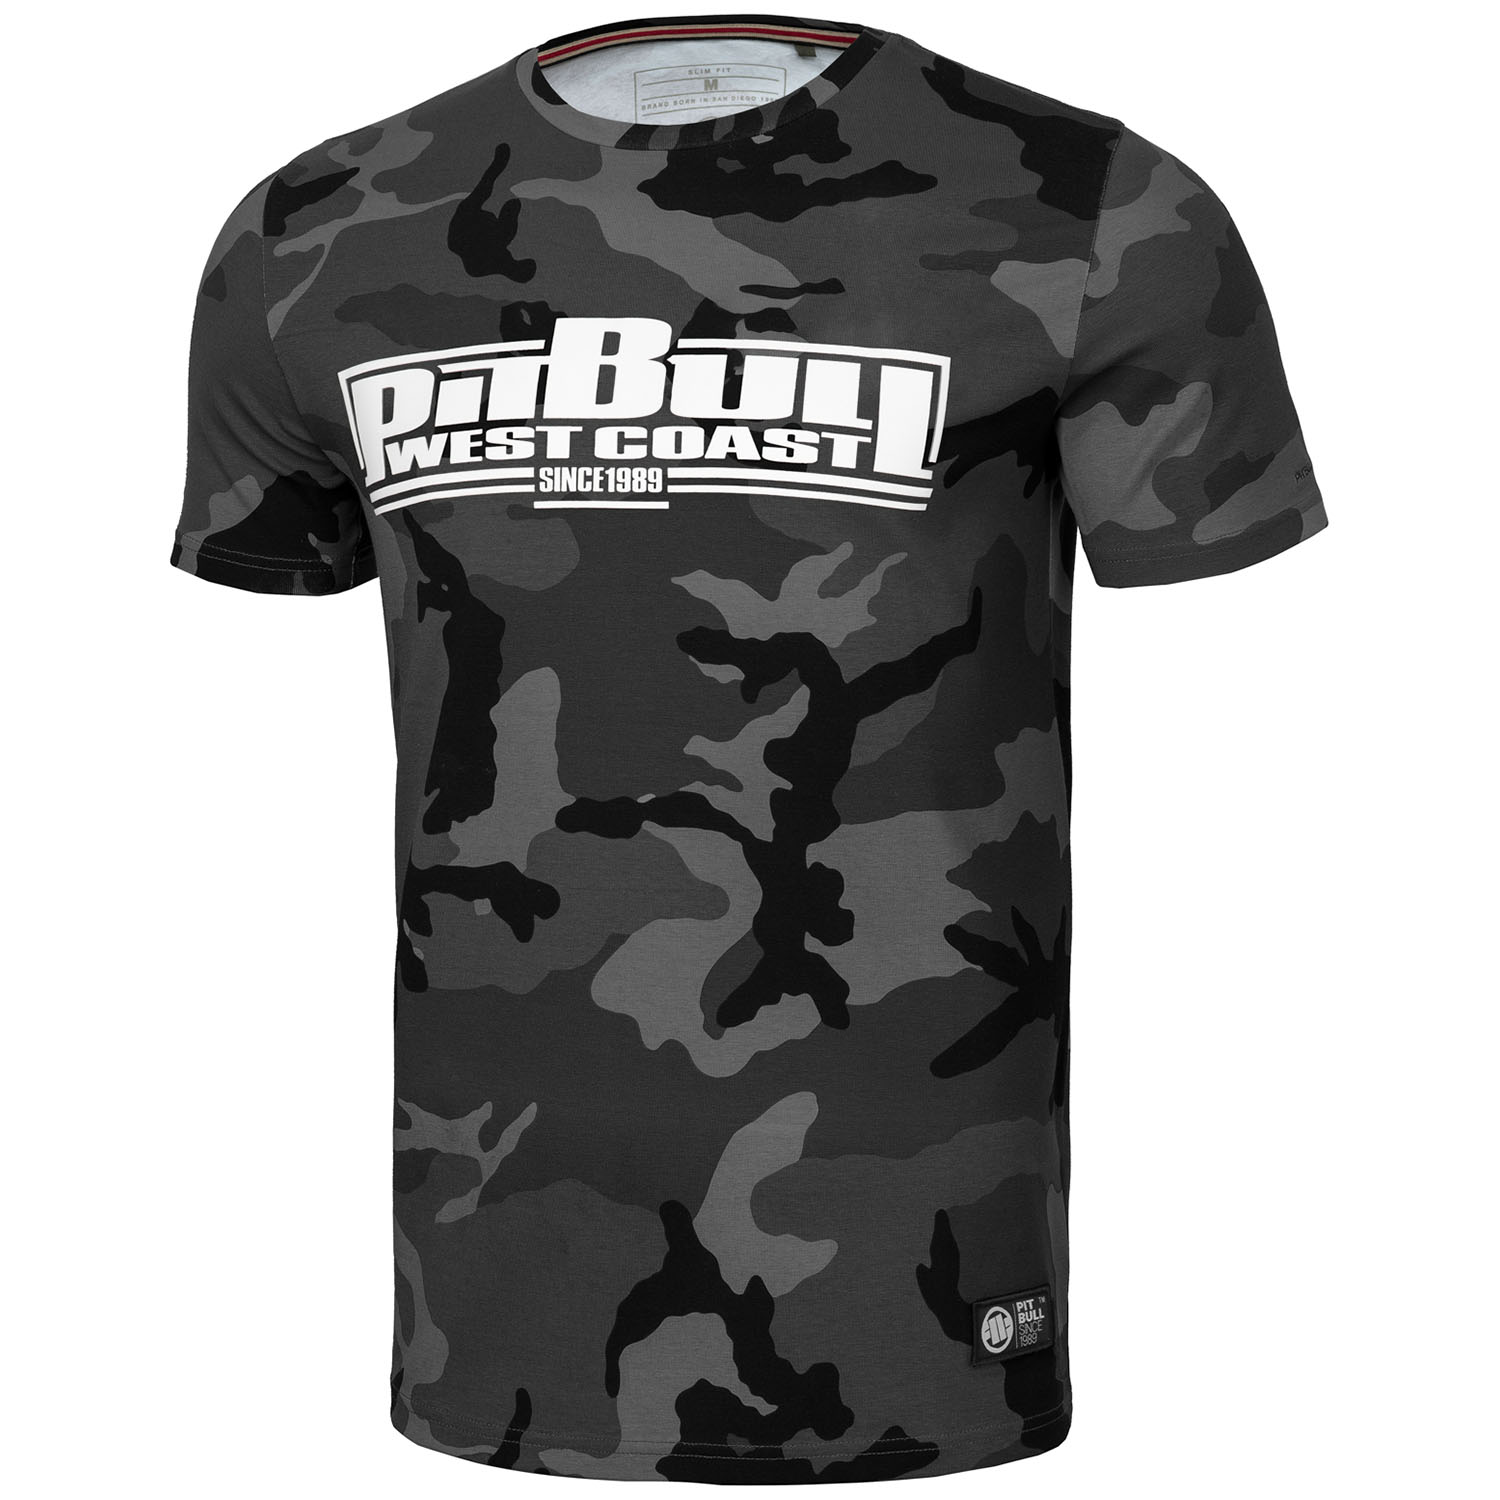 Pit Bull West Coast, T-Shirt, Classic Boxing Slim Fit, camo-black